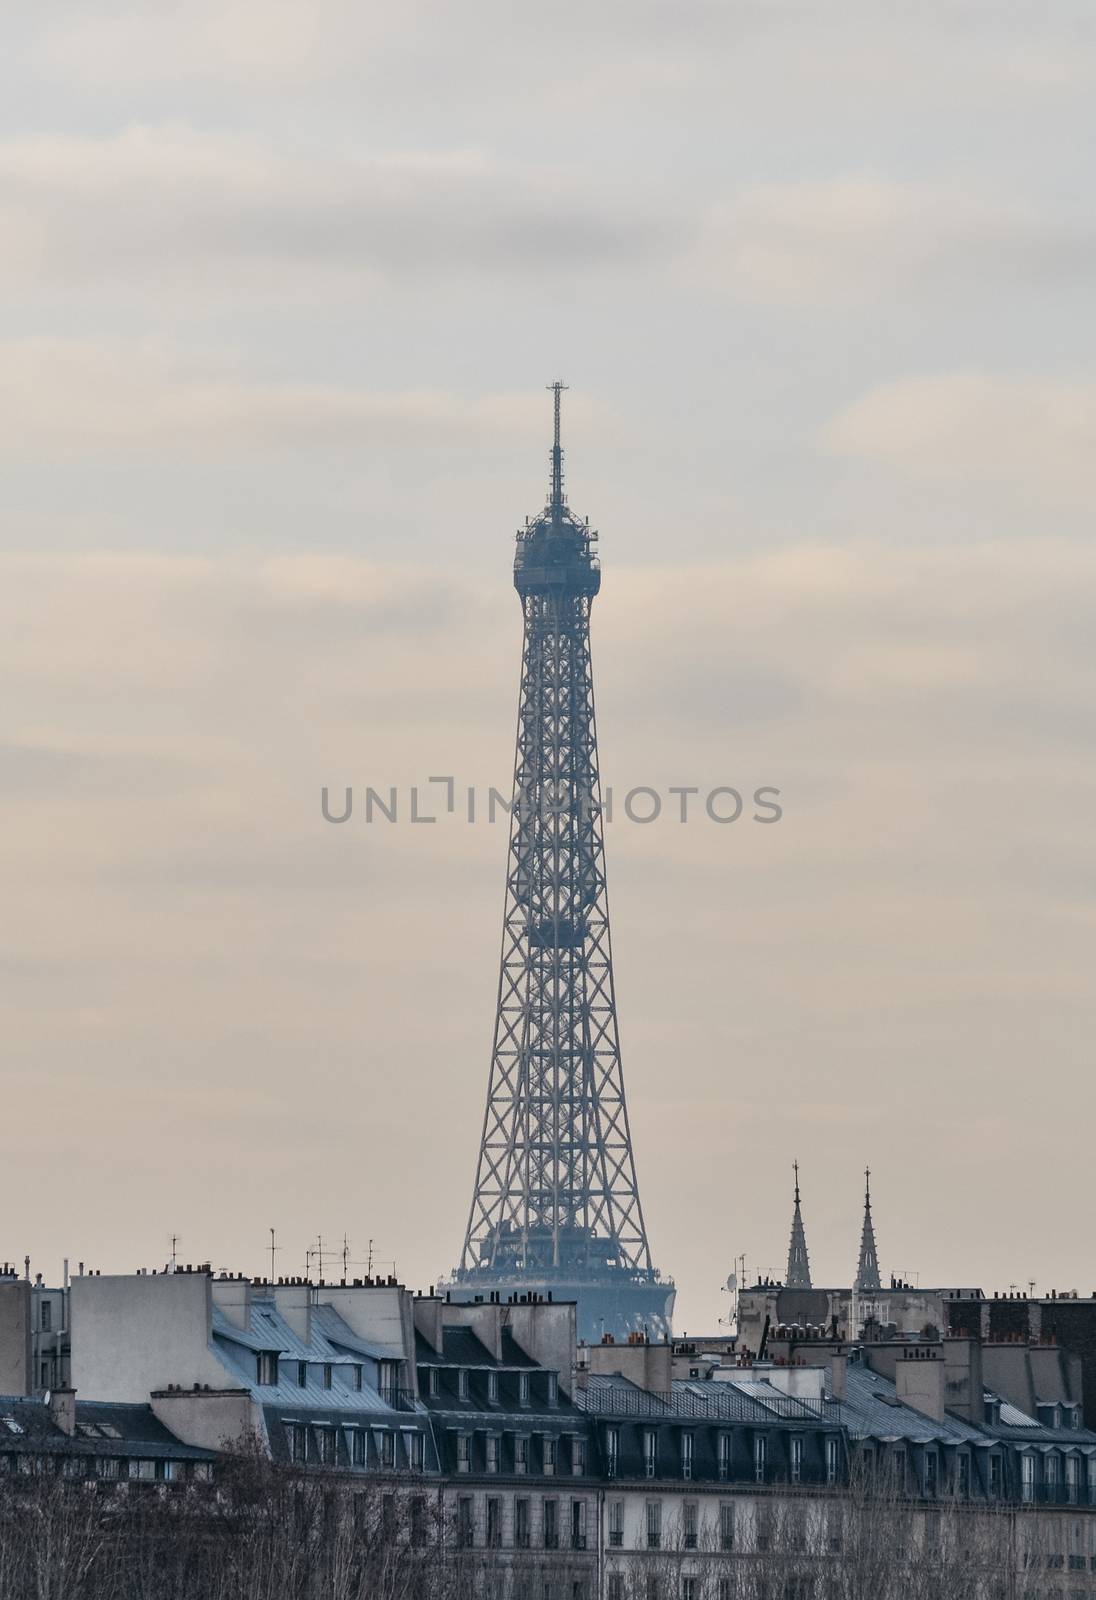 The Eiffel Tower in Paris by dutourdumonde